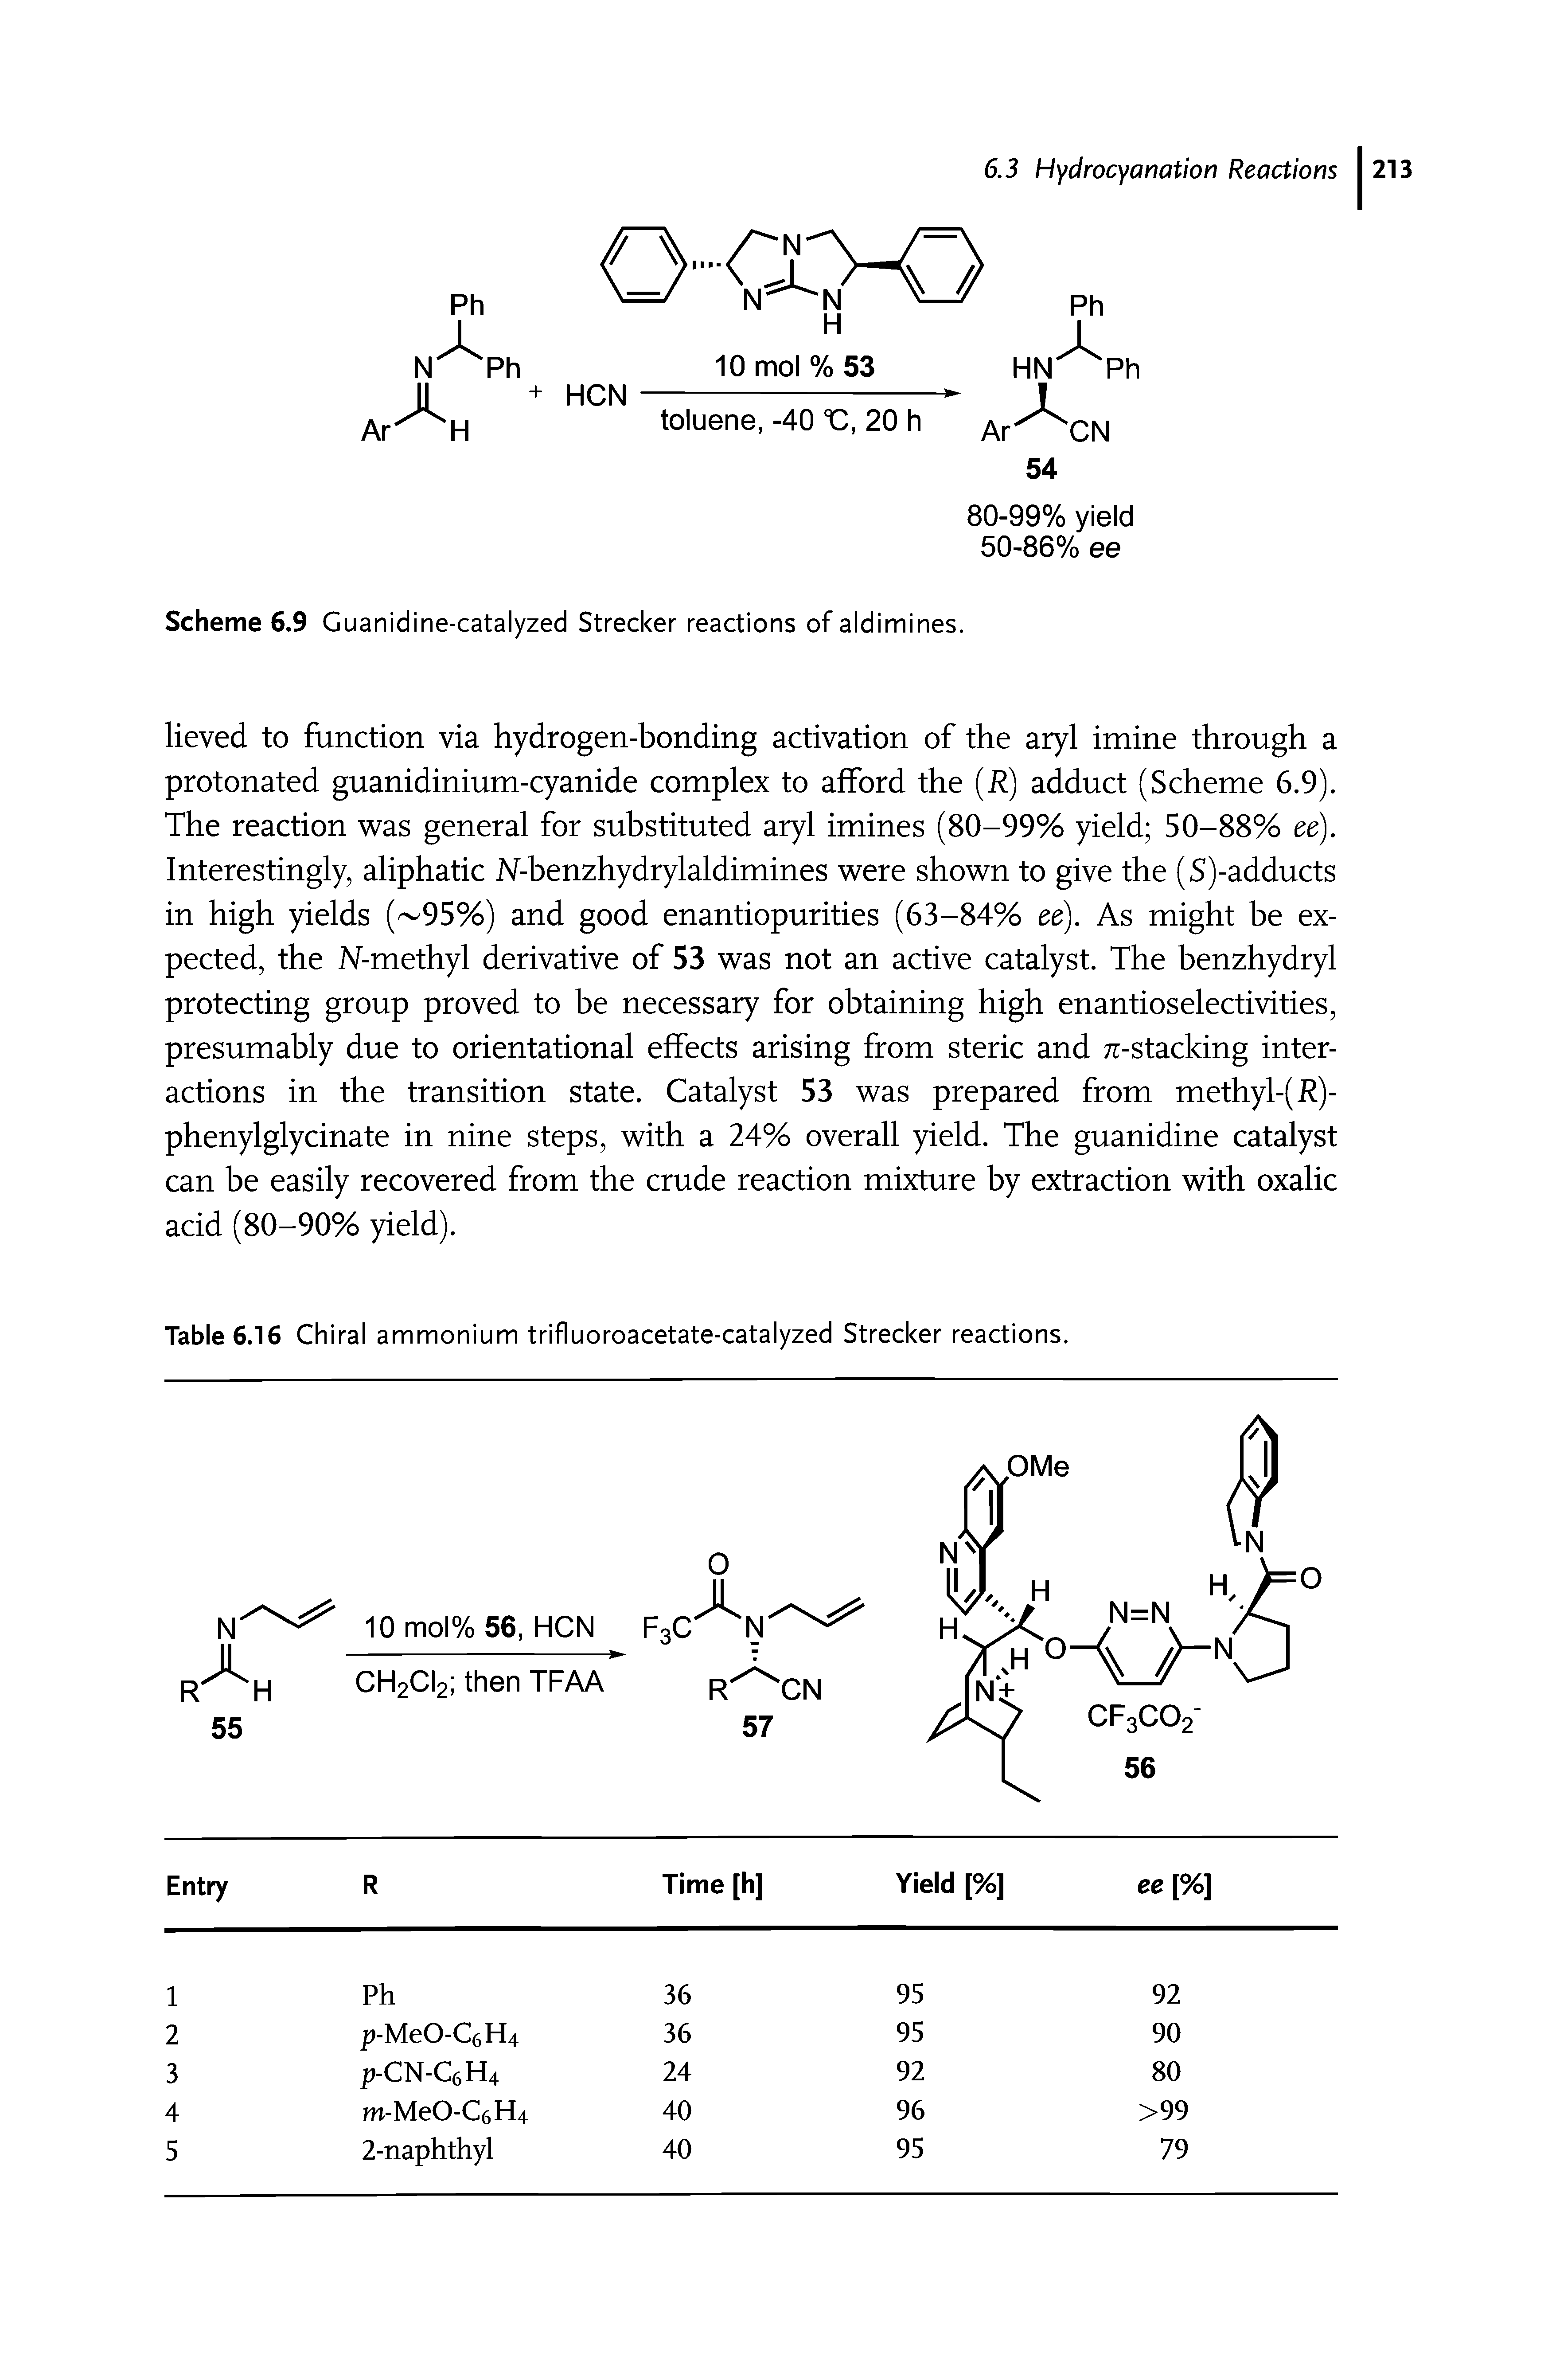 Table 6.16 Chiral ammonium trifluoroacetate-catalyzed Strecker reactions.